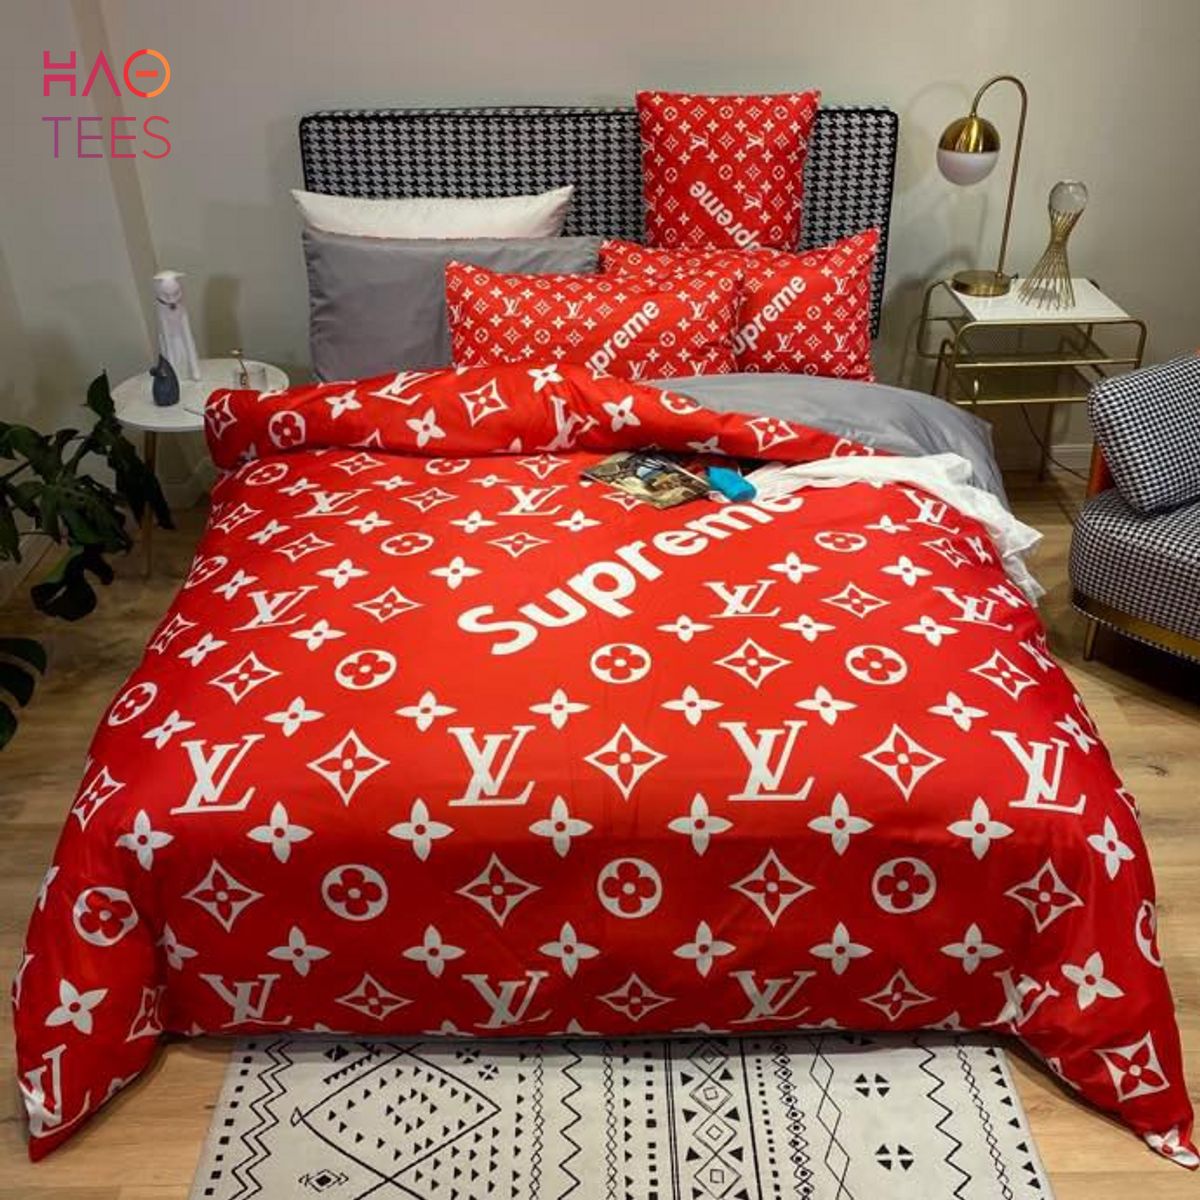 Louis Vuitton x Supreme 2017 Box Logo Wool Throw Blanket - Red Throws,  Pillows & Throws - LOUSU20139